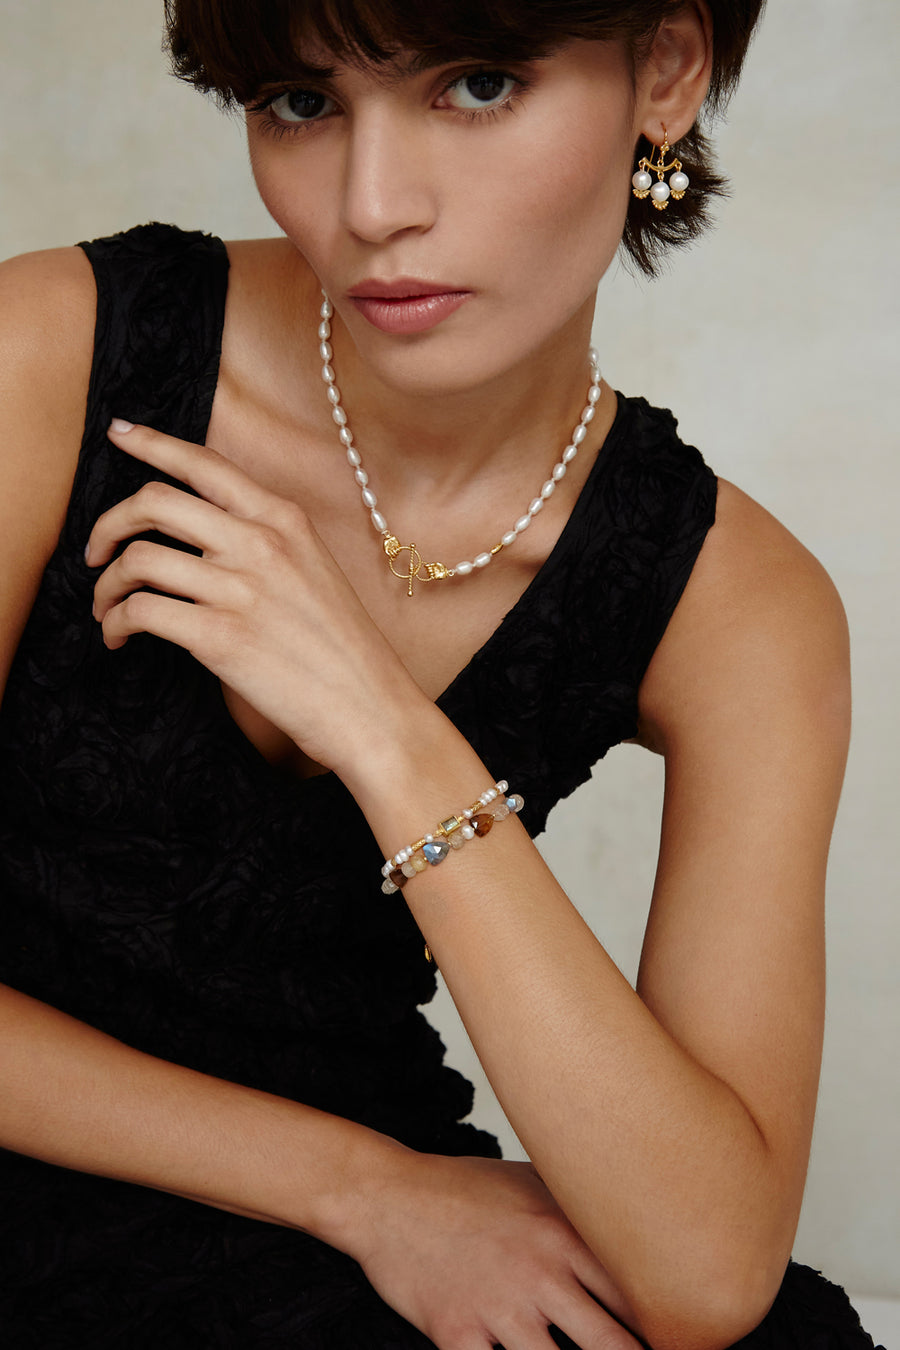 Chan Luu White Pearl and Labradorite Silk String Bracelet